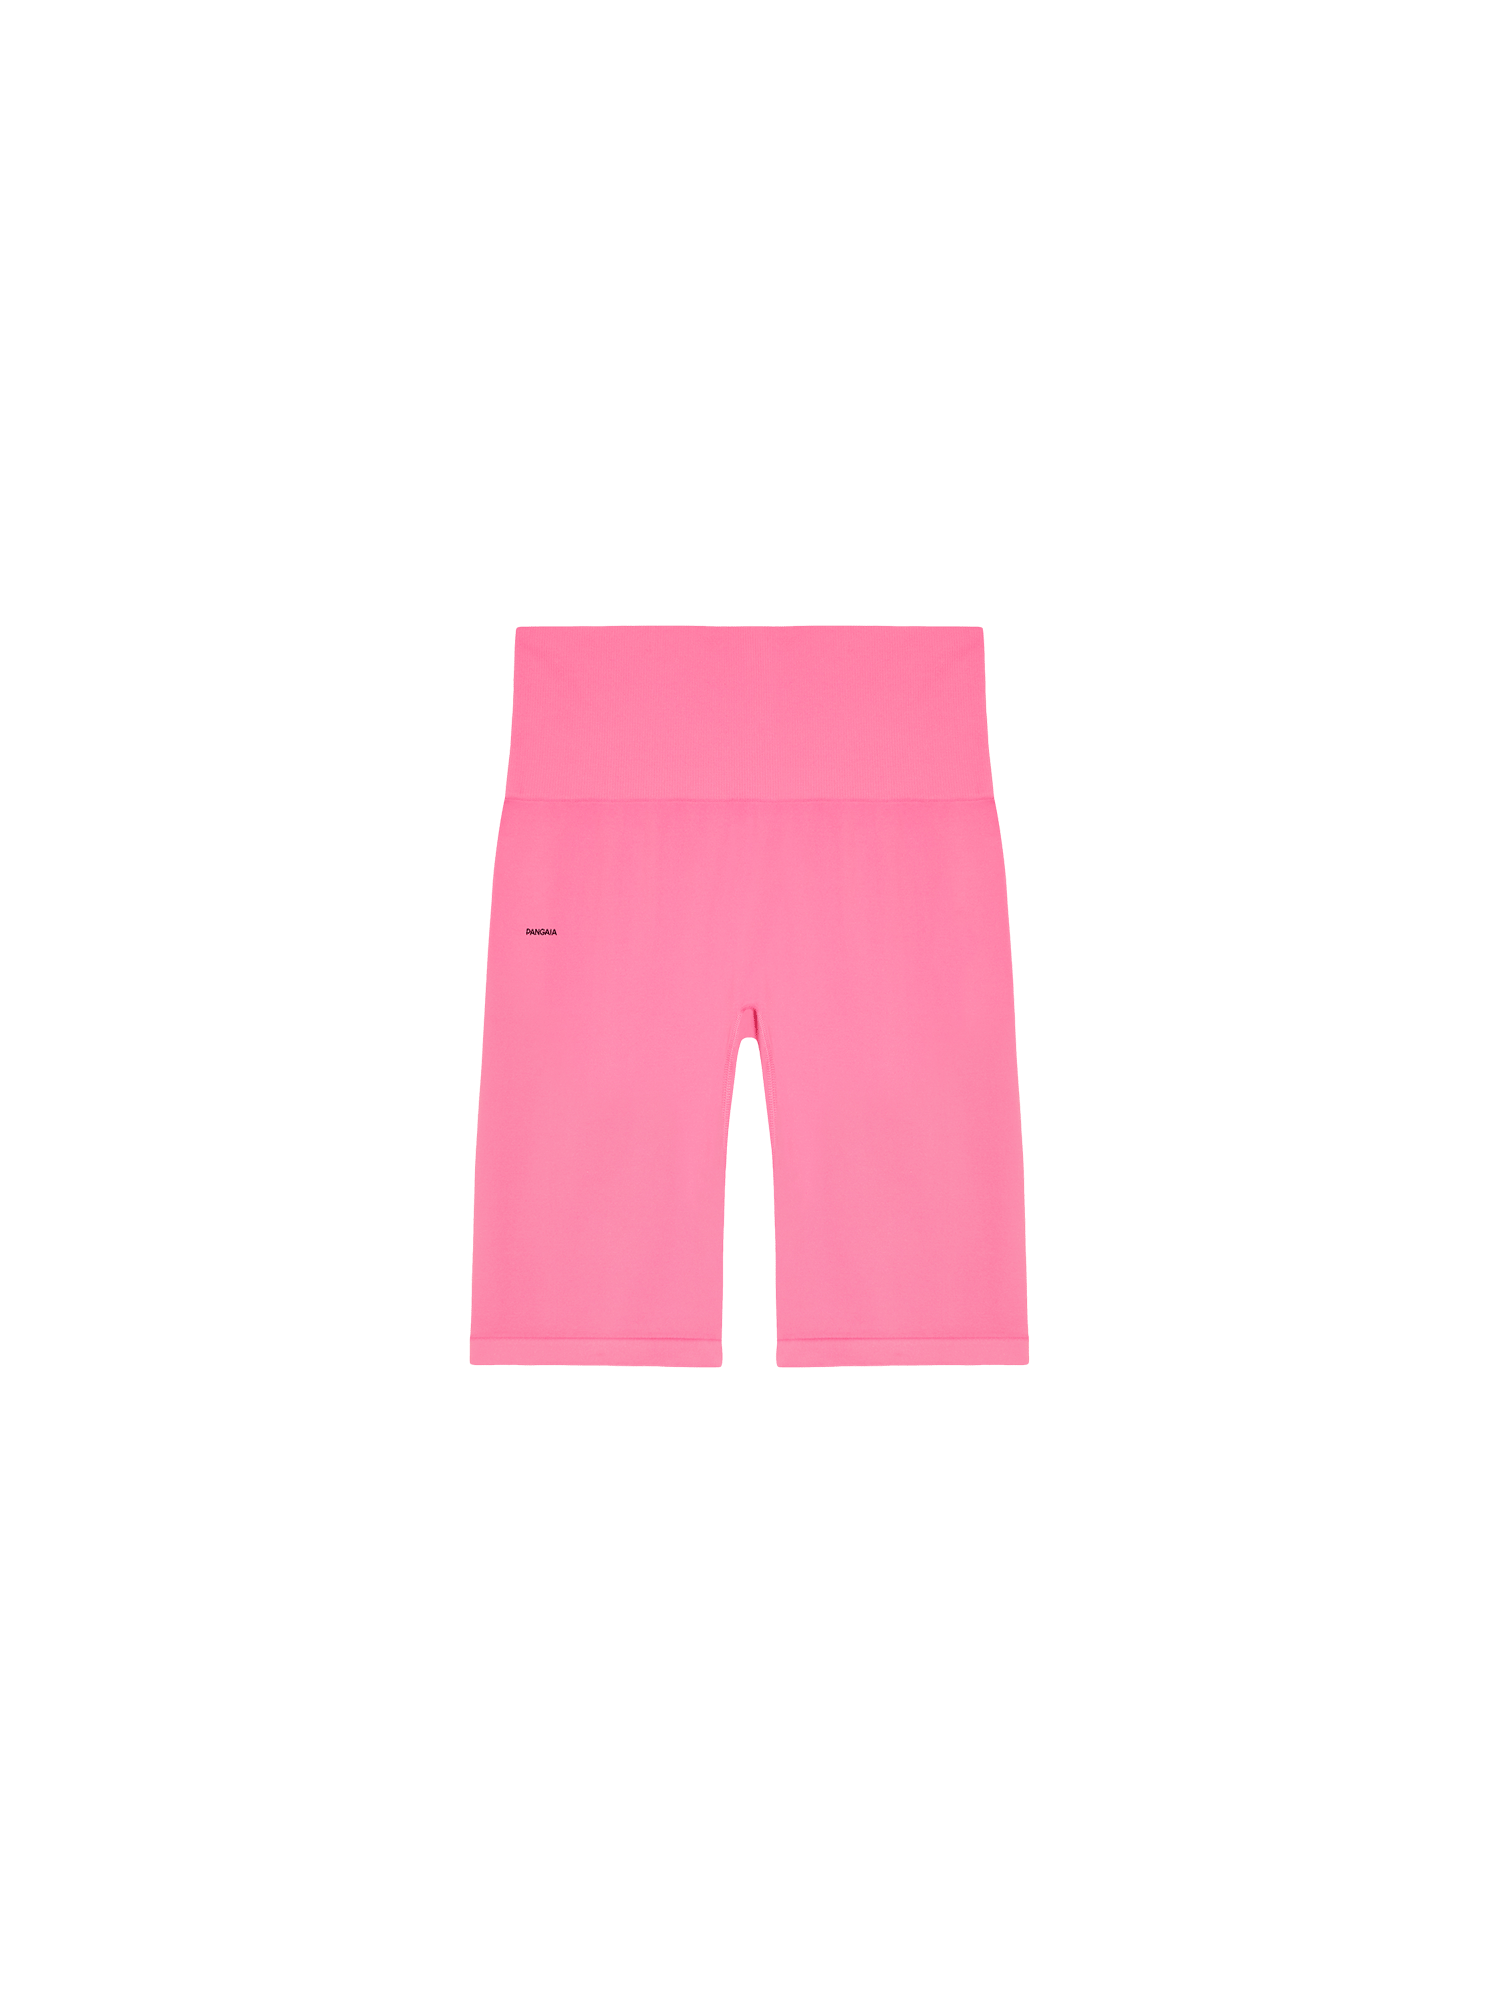 Activewear Womens Shorts Watermelon Pink-packshot-3